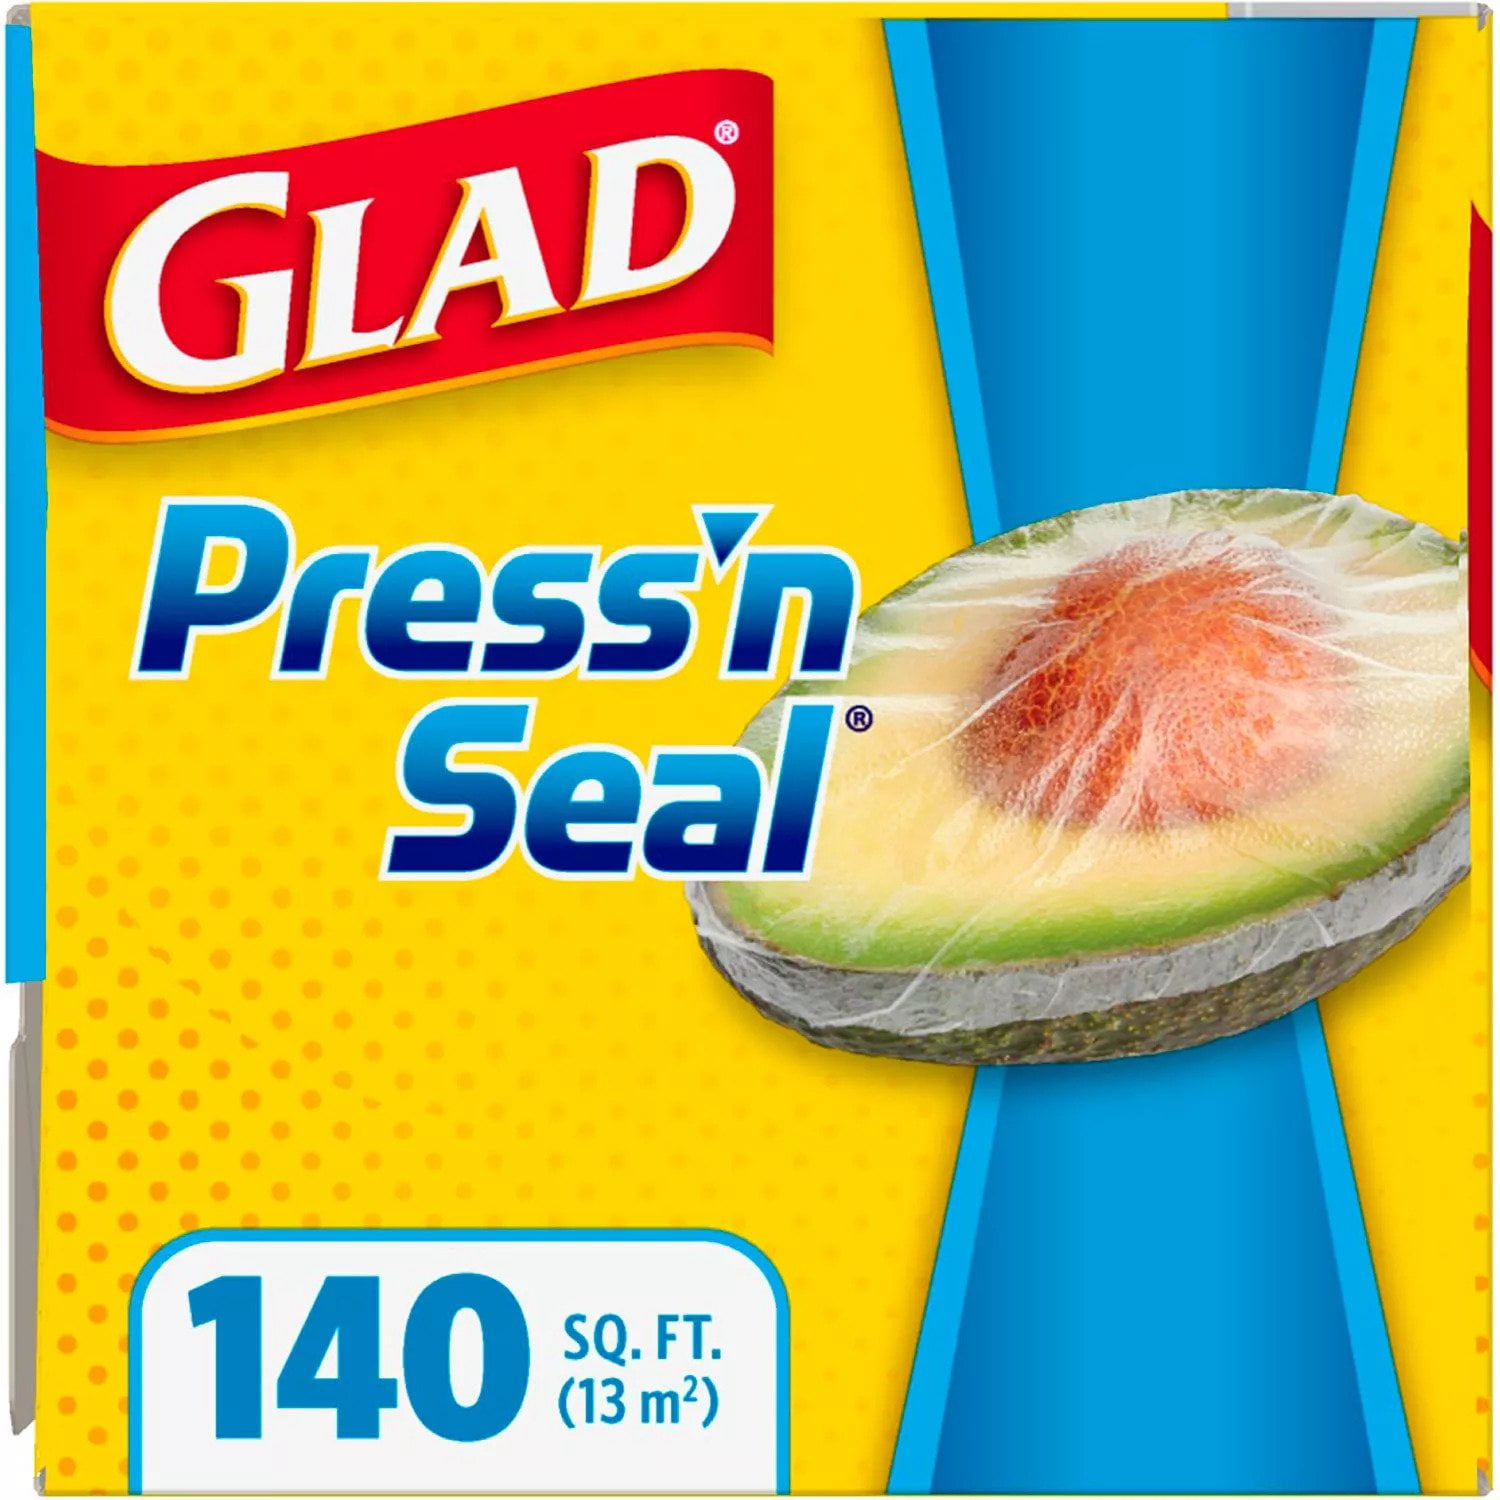 1611976 GLAD PRESS N SEAL 2x 140 sq ft 2 50 INSTANT SAVINGS